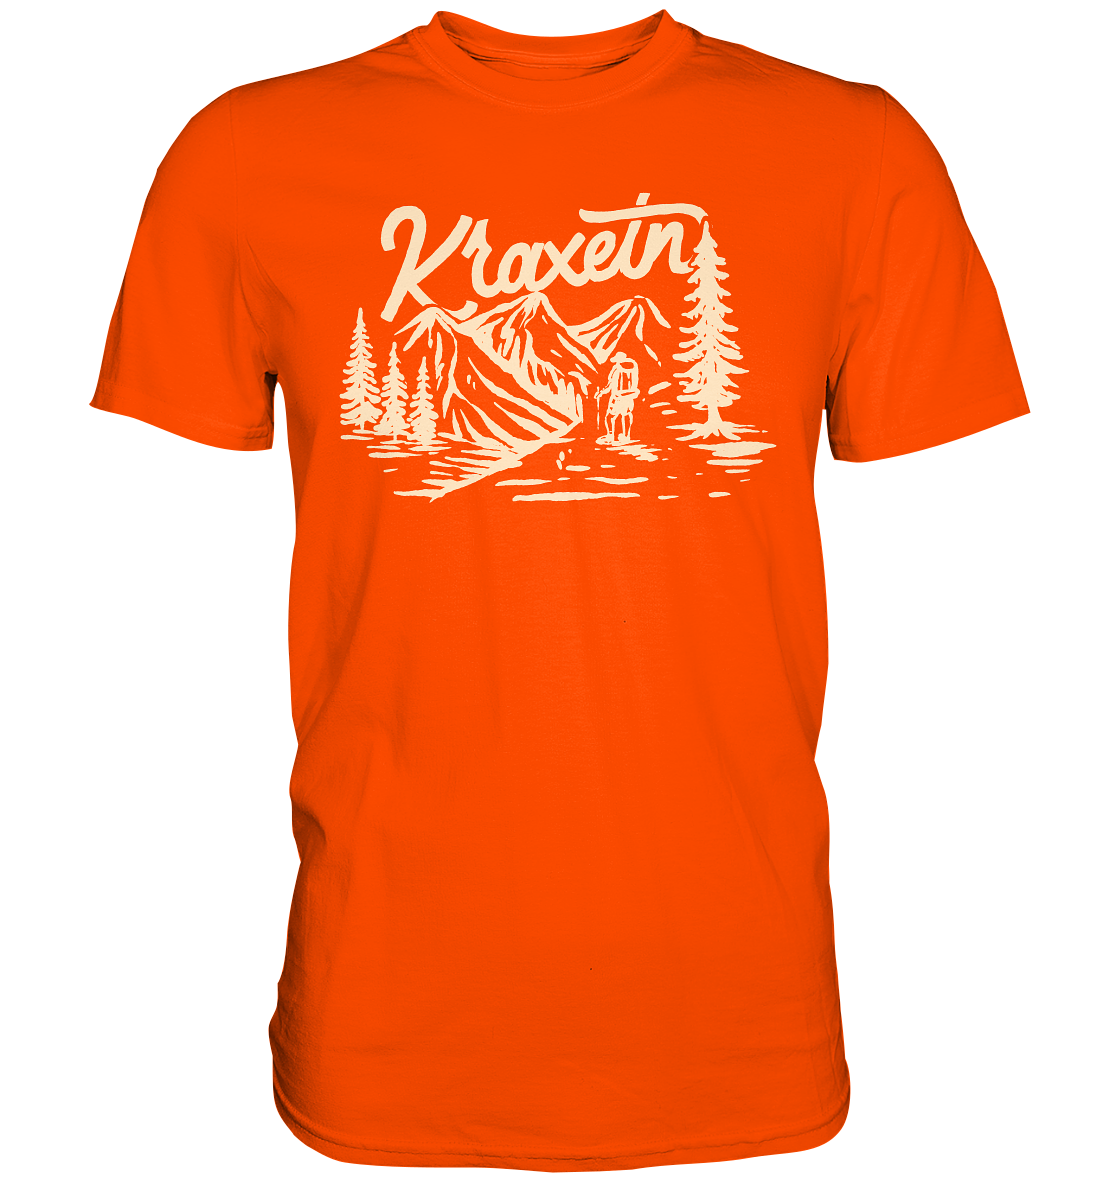 Kraxeln - Classic Shirt